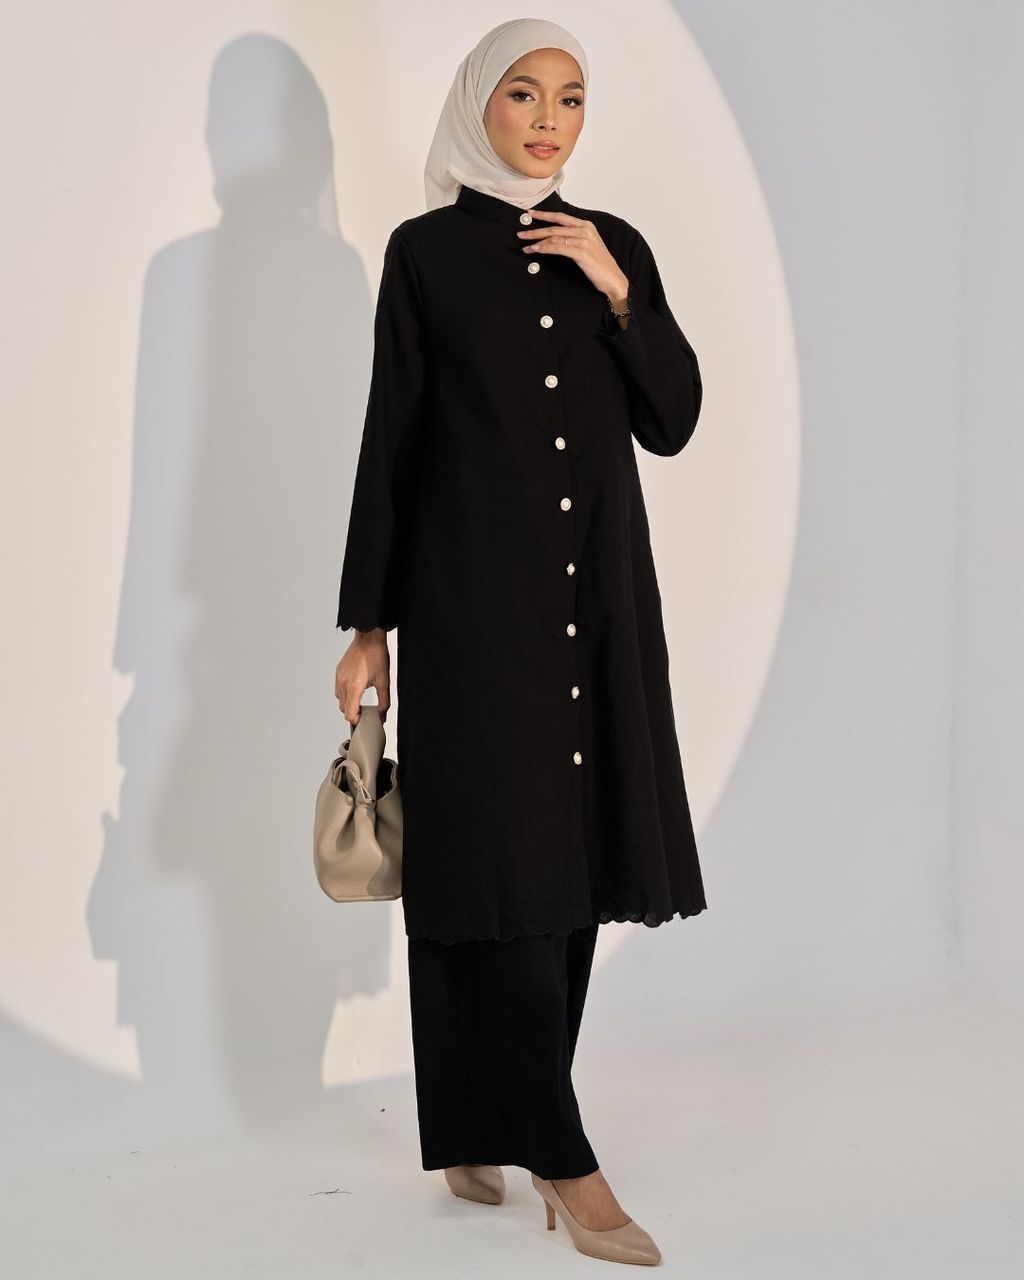 haura-wear-cotton-baju-muslimah-set-seluar-set-skirt-suit-muslimah-set-baju-dan-seluar-muslimah-palazzo (16)